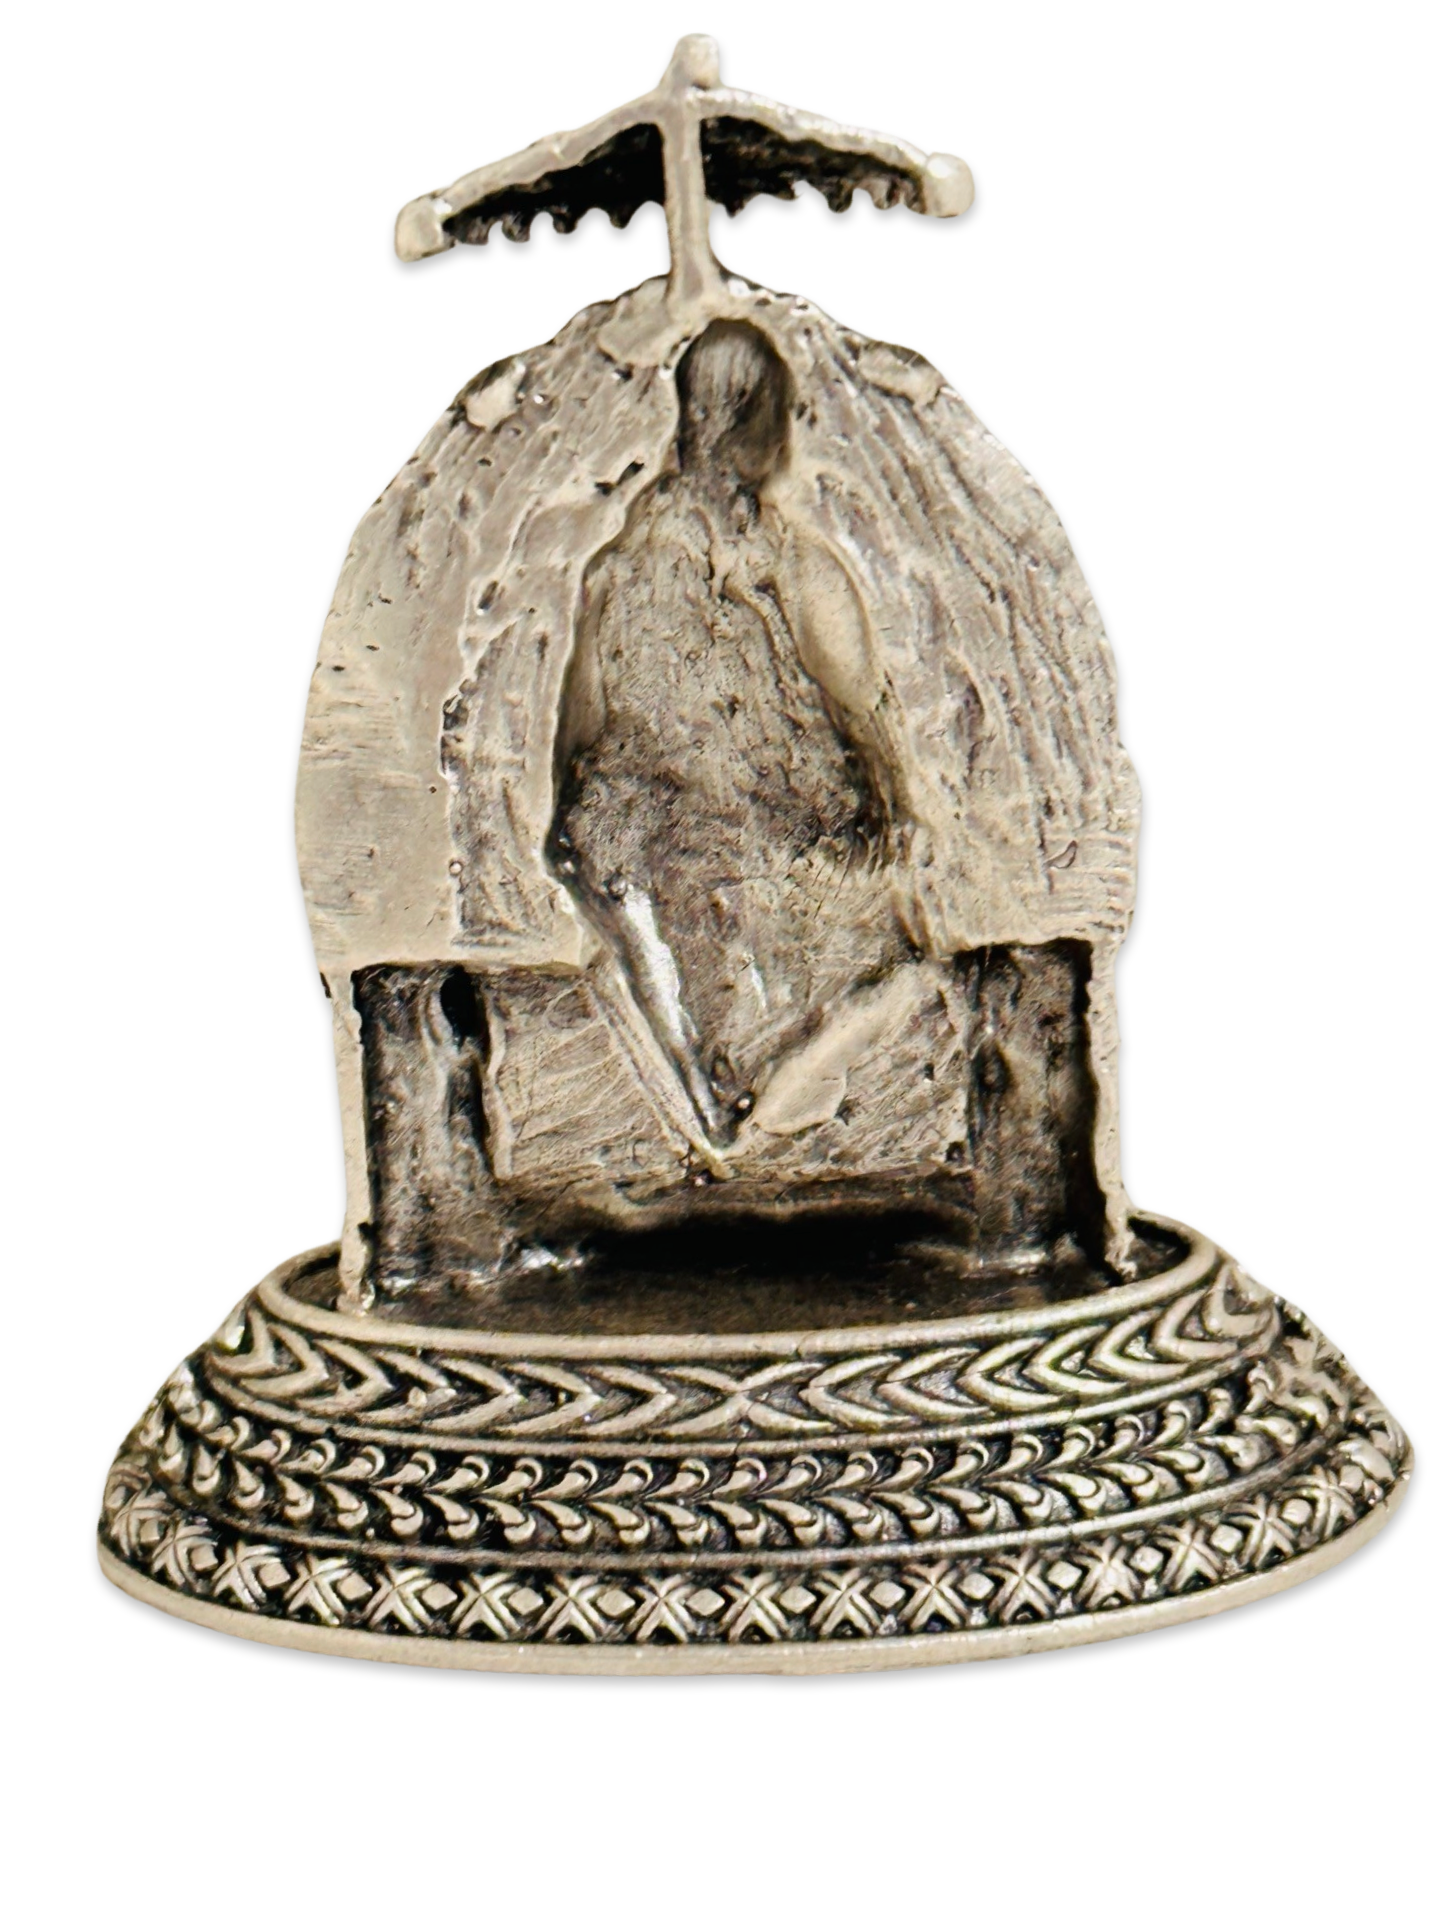 Antique Silver Sai Baba Idol